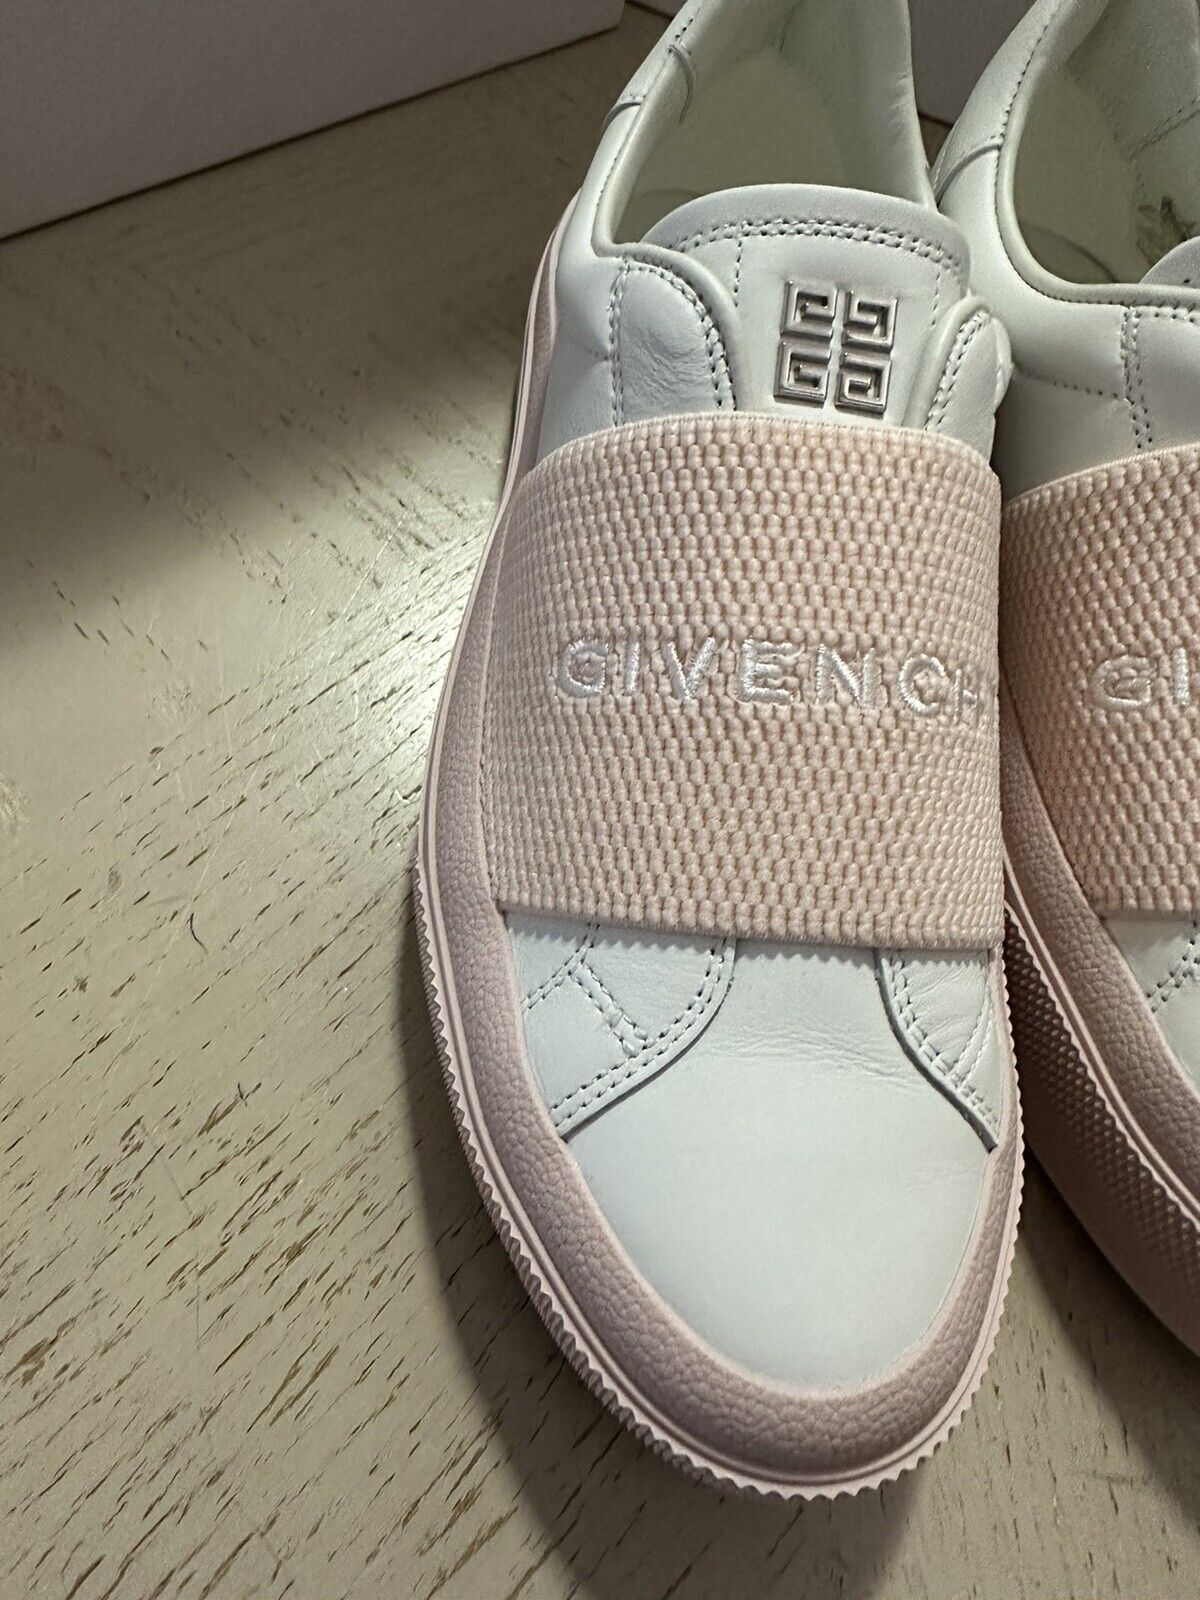 NIB $ 675 Givenchy Damen City Sport Sneakers Schuhe Rosa/Weiß 7 US/37 Eu